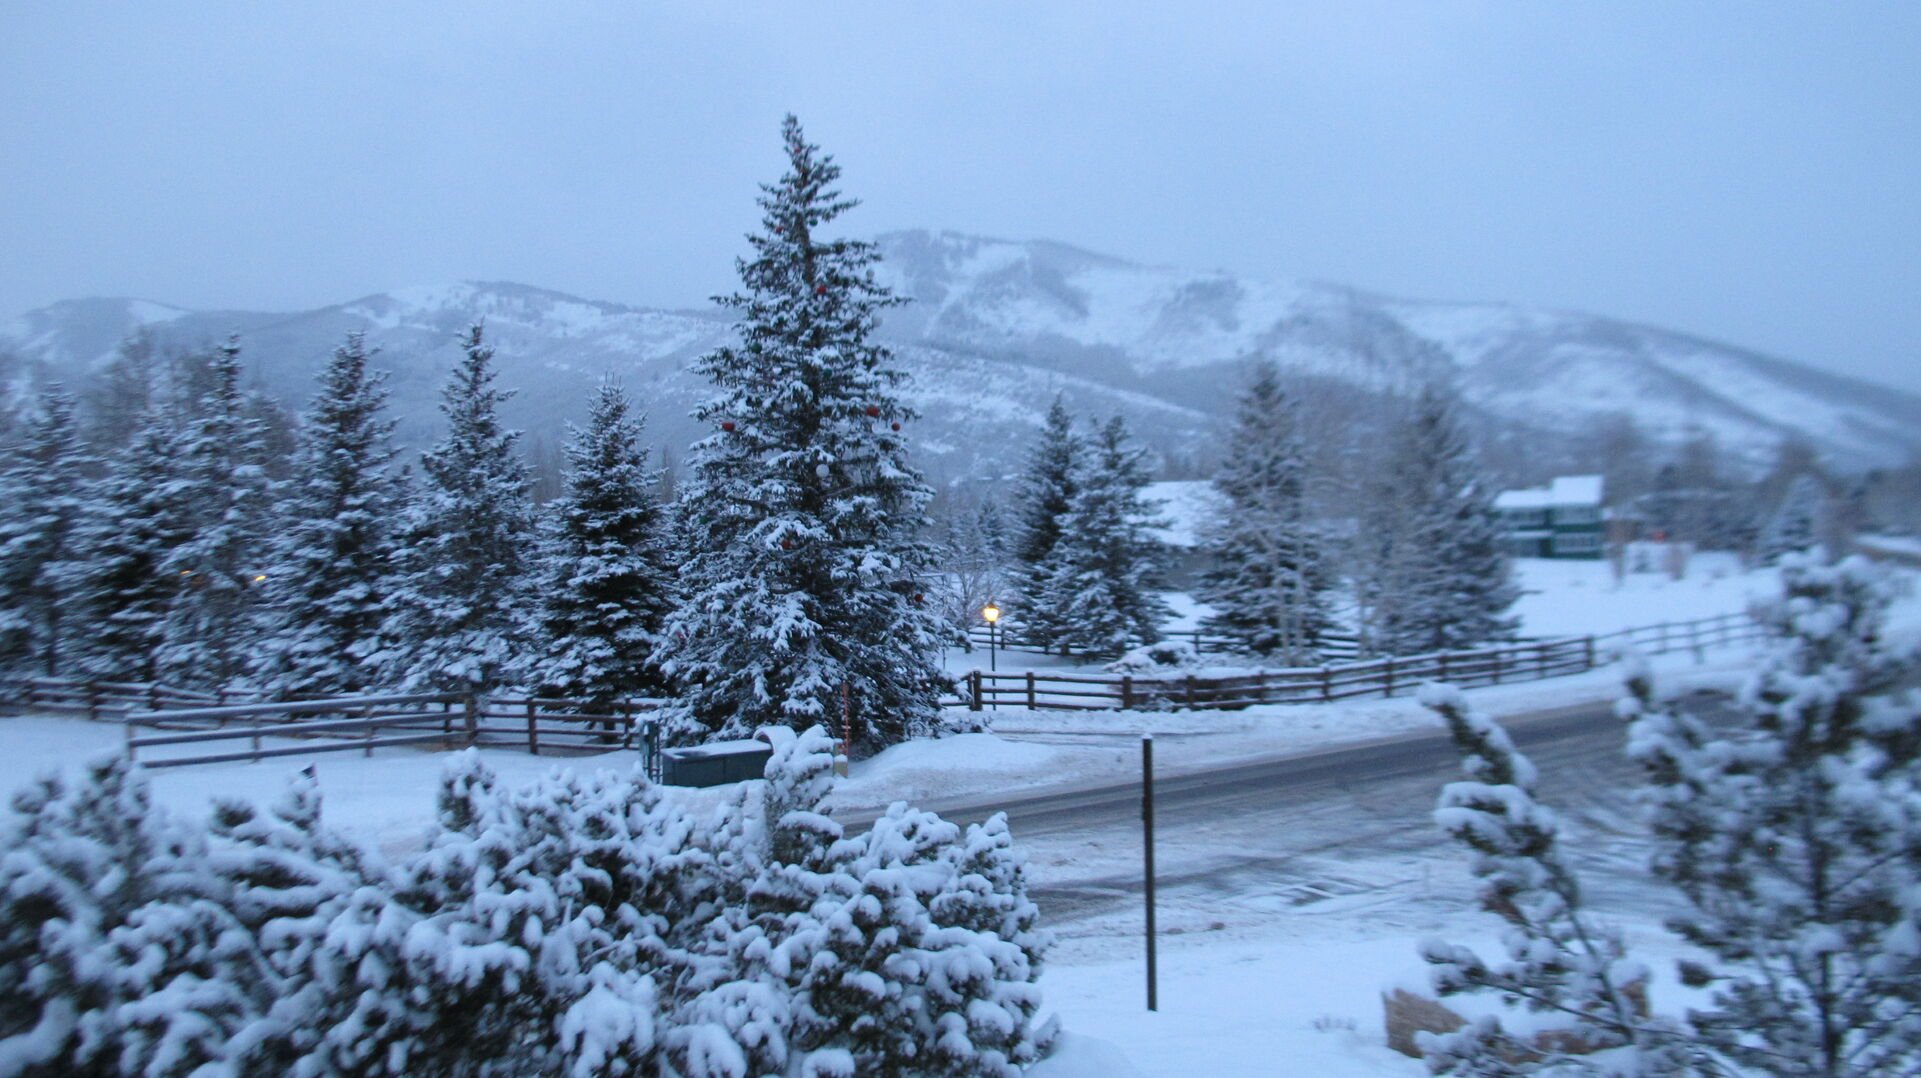 View in the winter of ski slopes